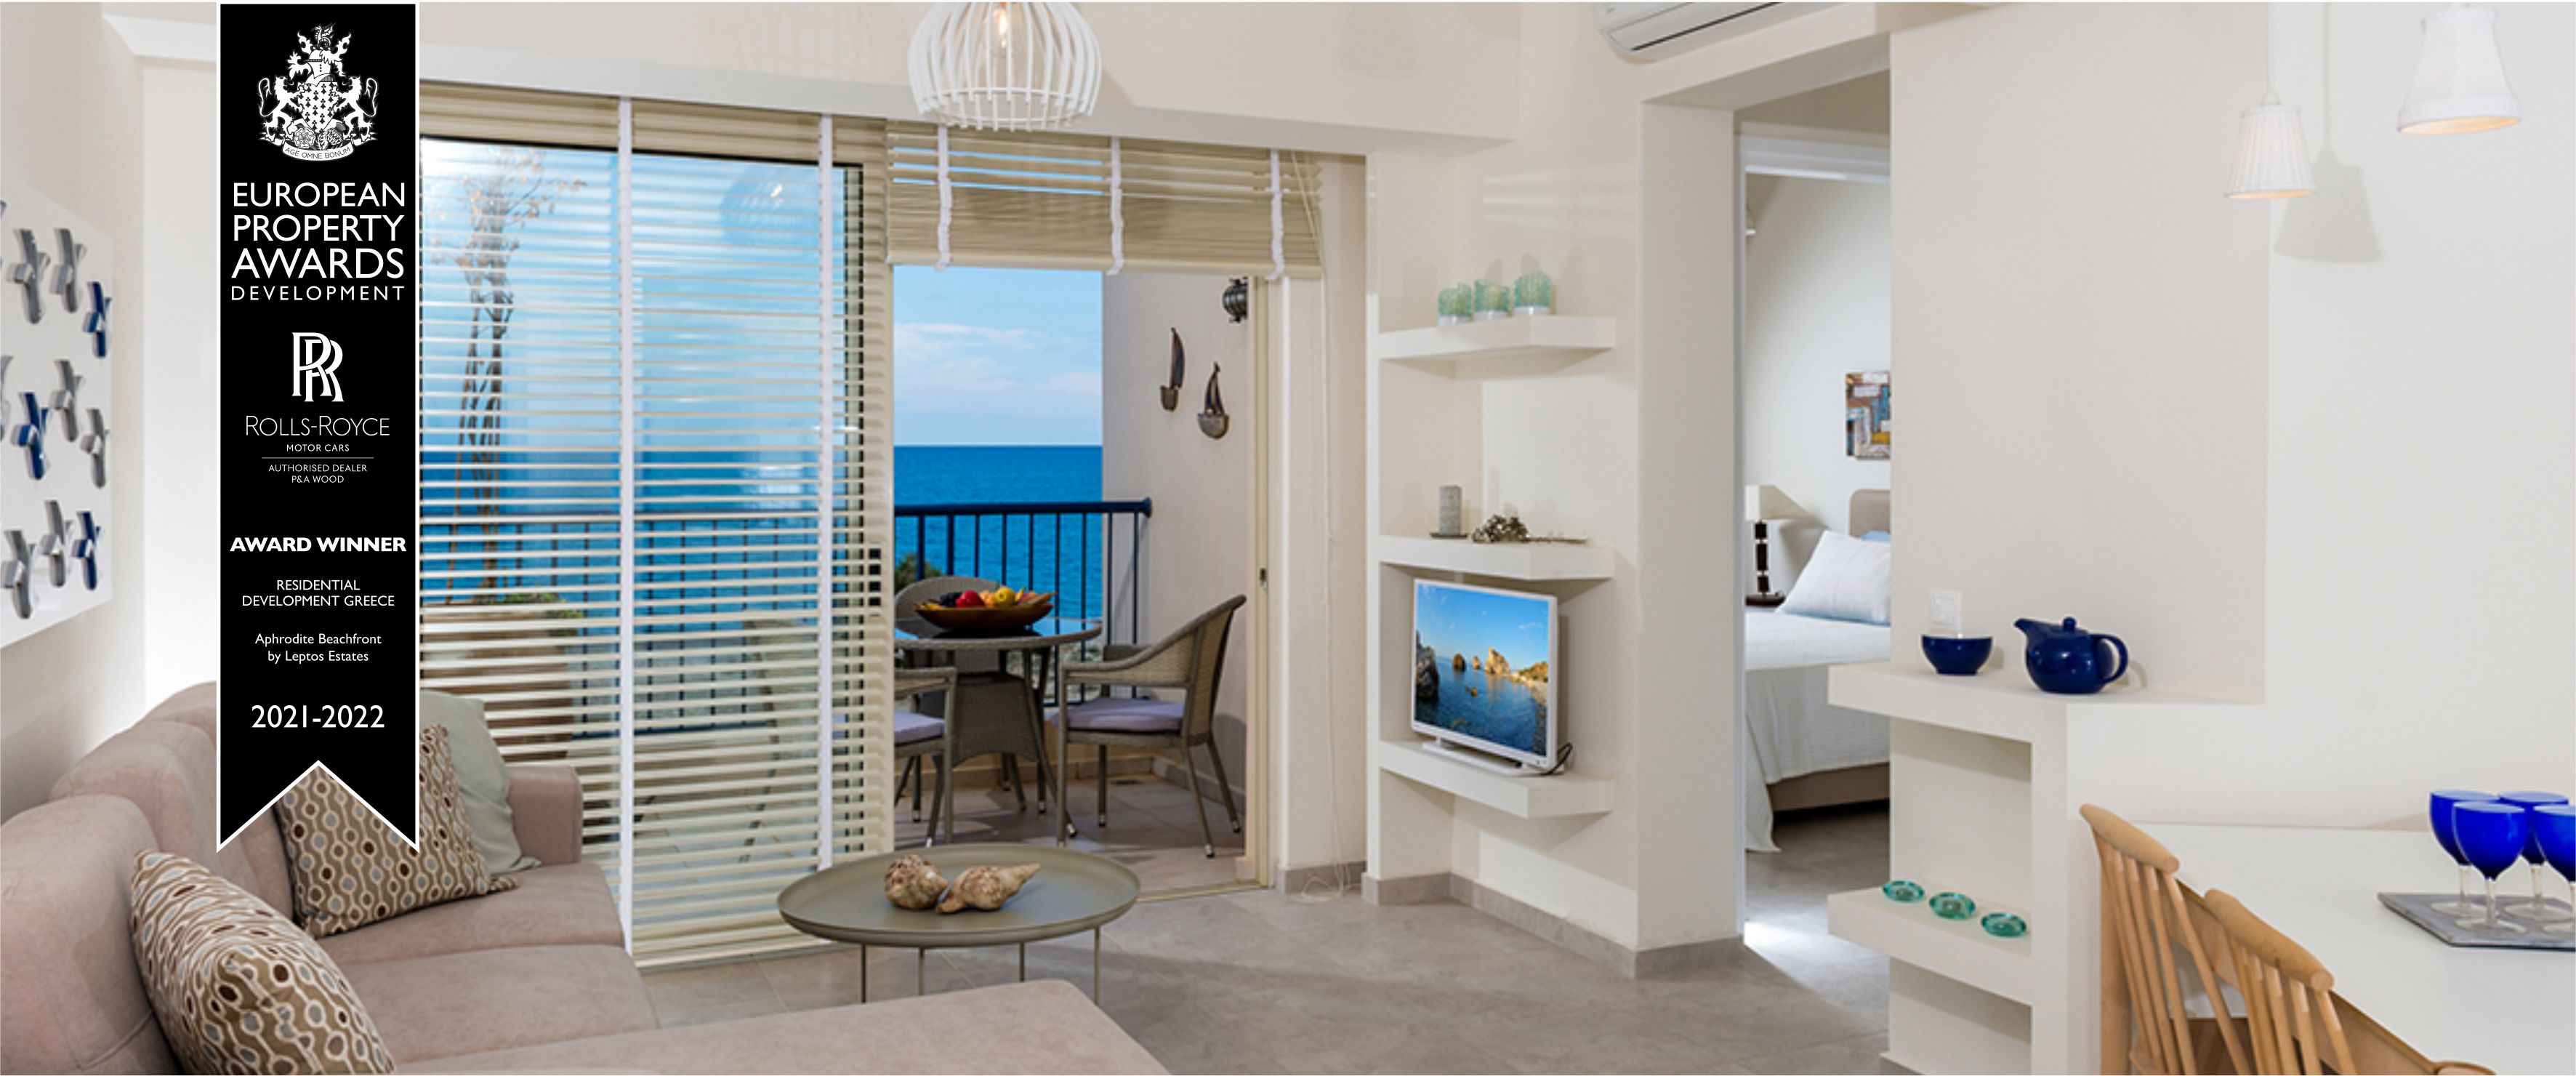 Aphrodite Beachfront 2 Bedroom Penthouse / First Floor  at Maleme - Crete 